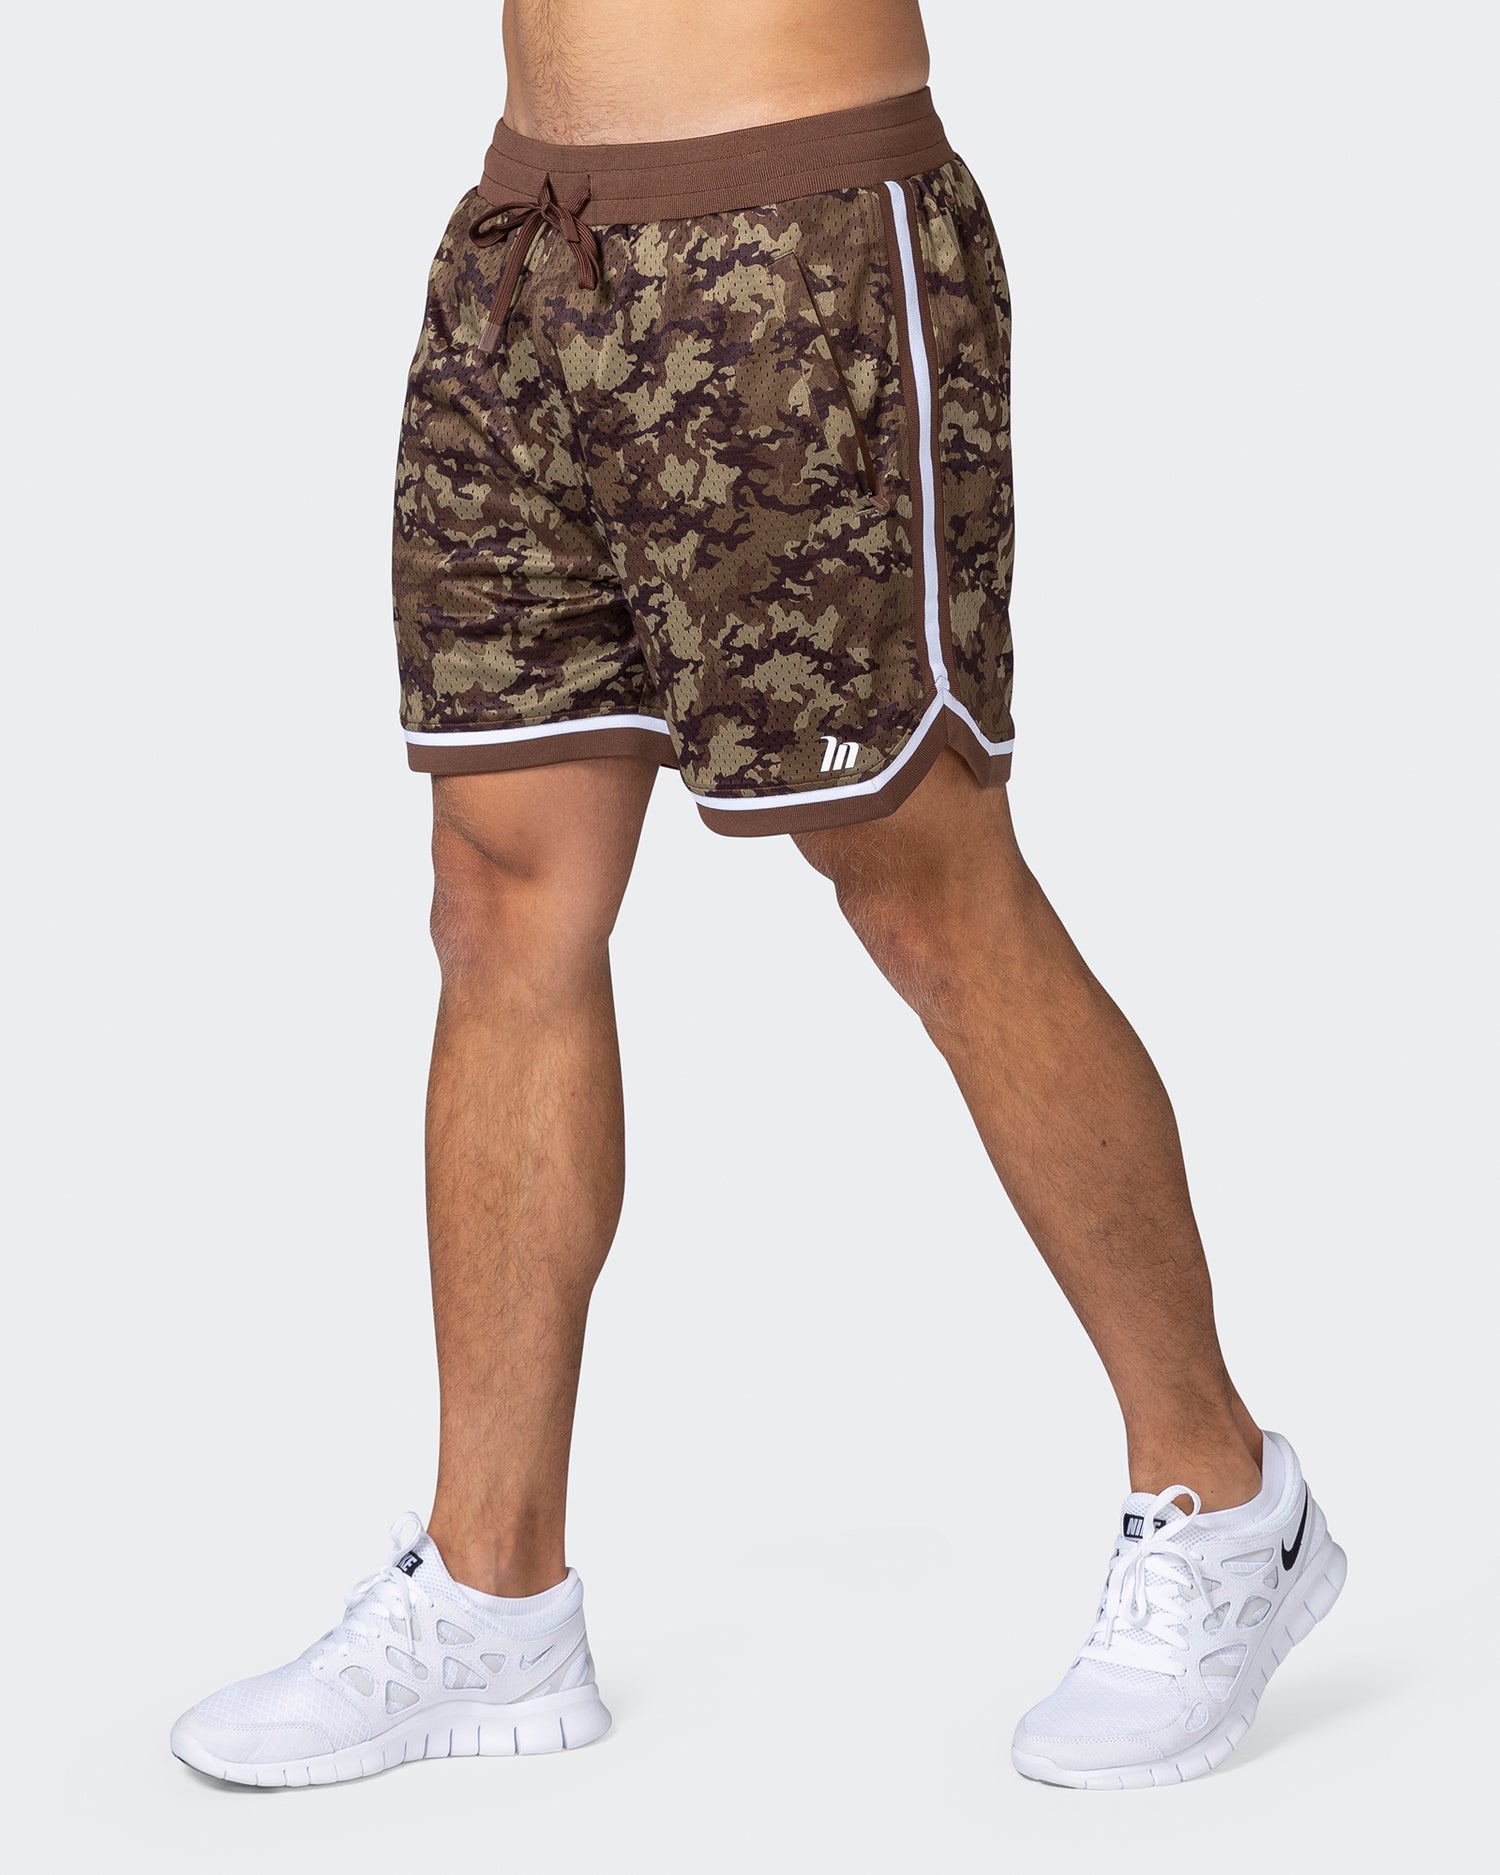 5" Basketball Shorts - Chestnut Camo Print